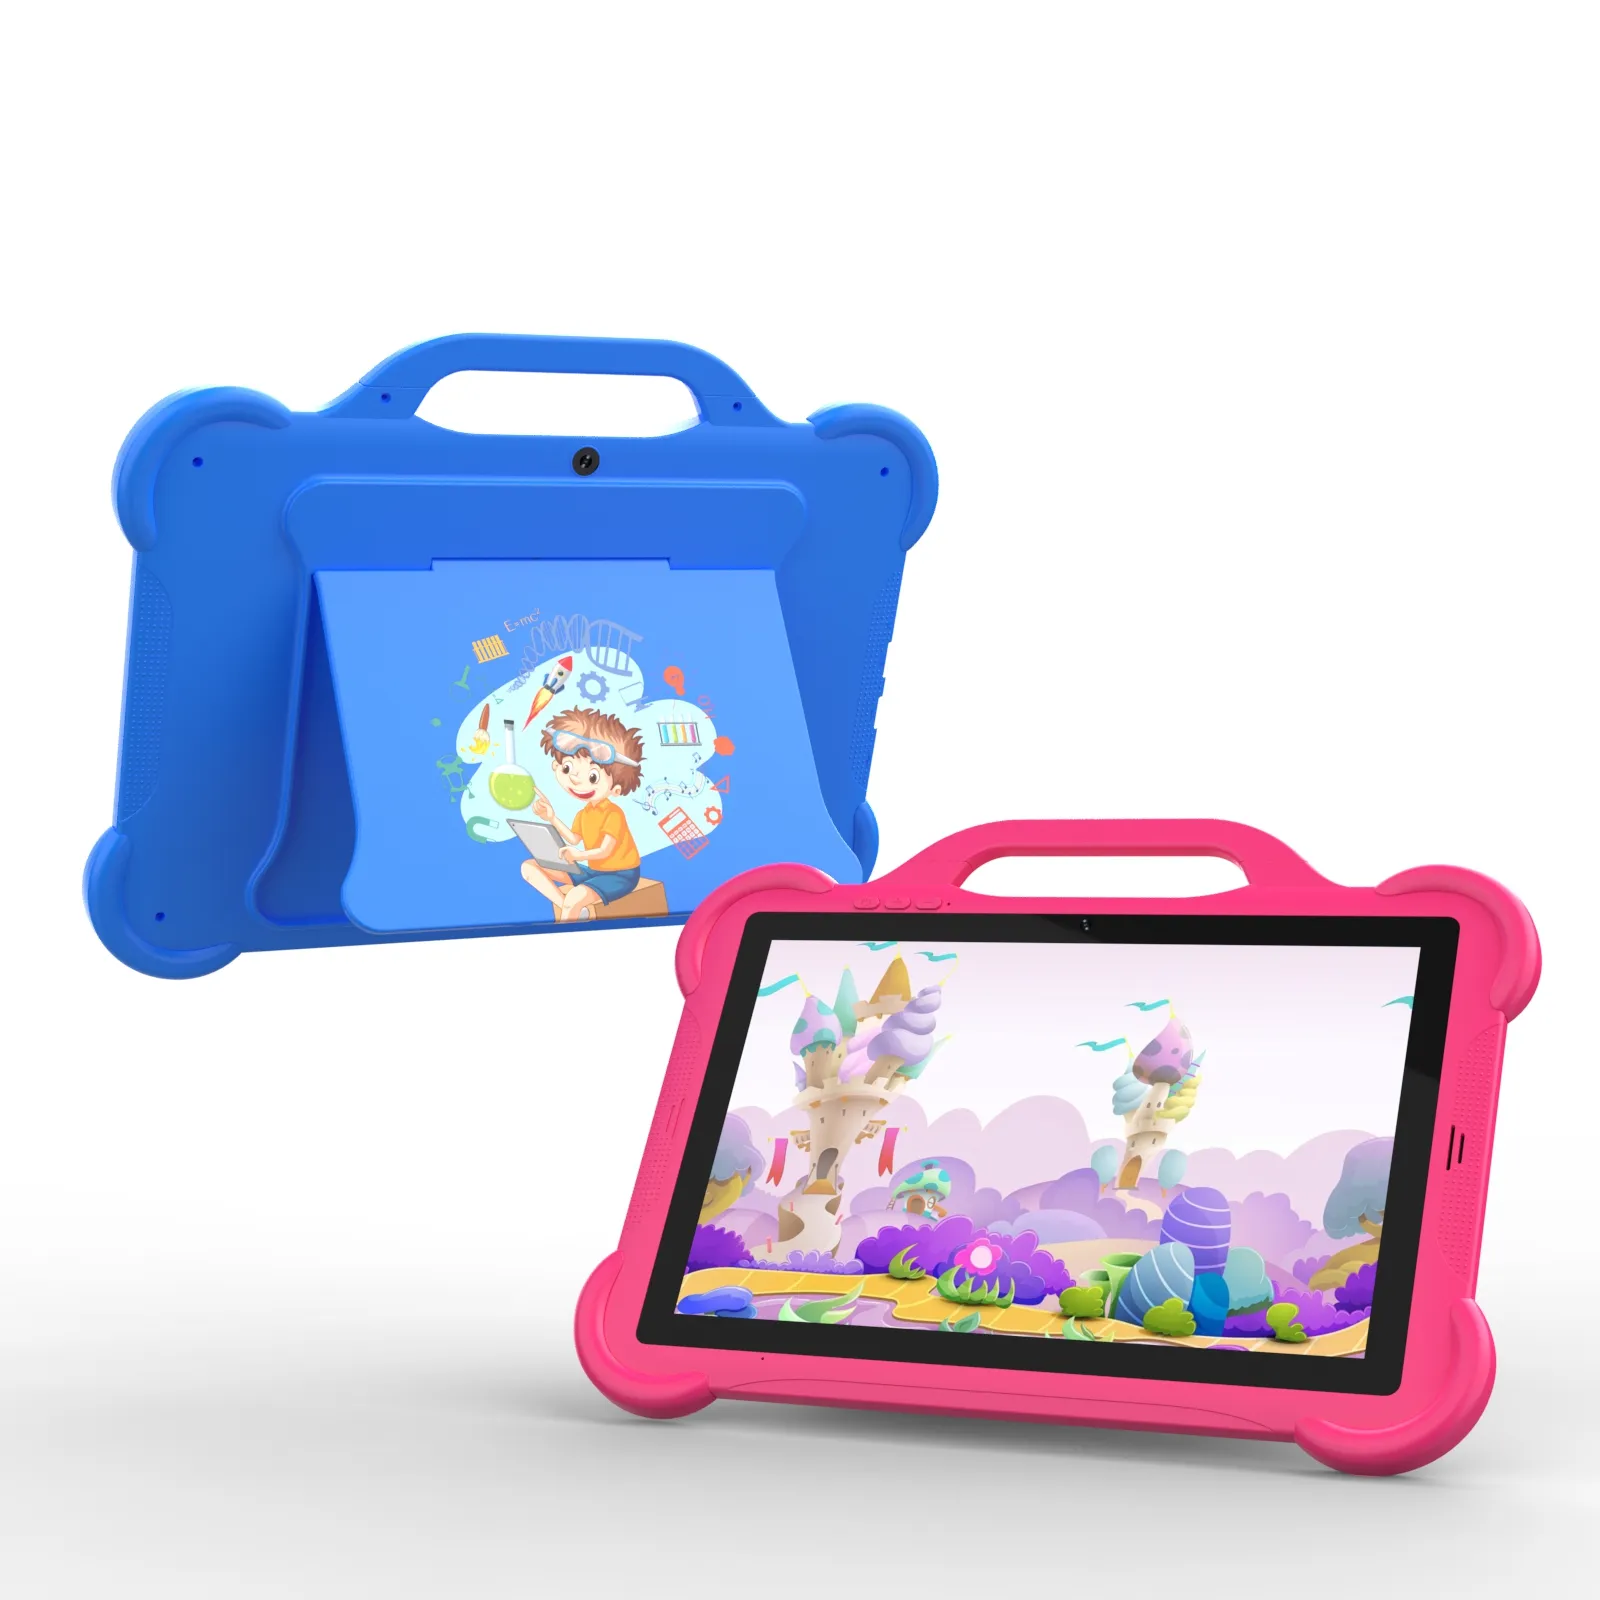 10,1 pulgadas Wifi Para Ninos Tab para aprender Android Educativo Niños Tablette Pour Enfants Kids Tablet